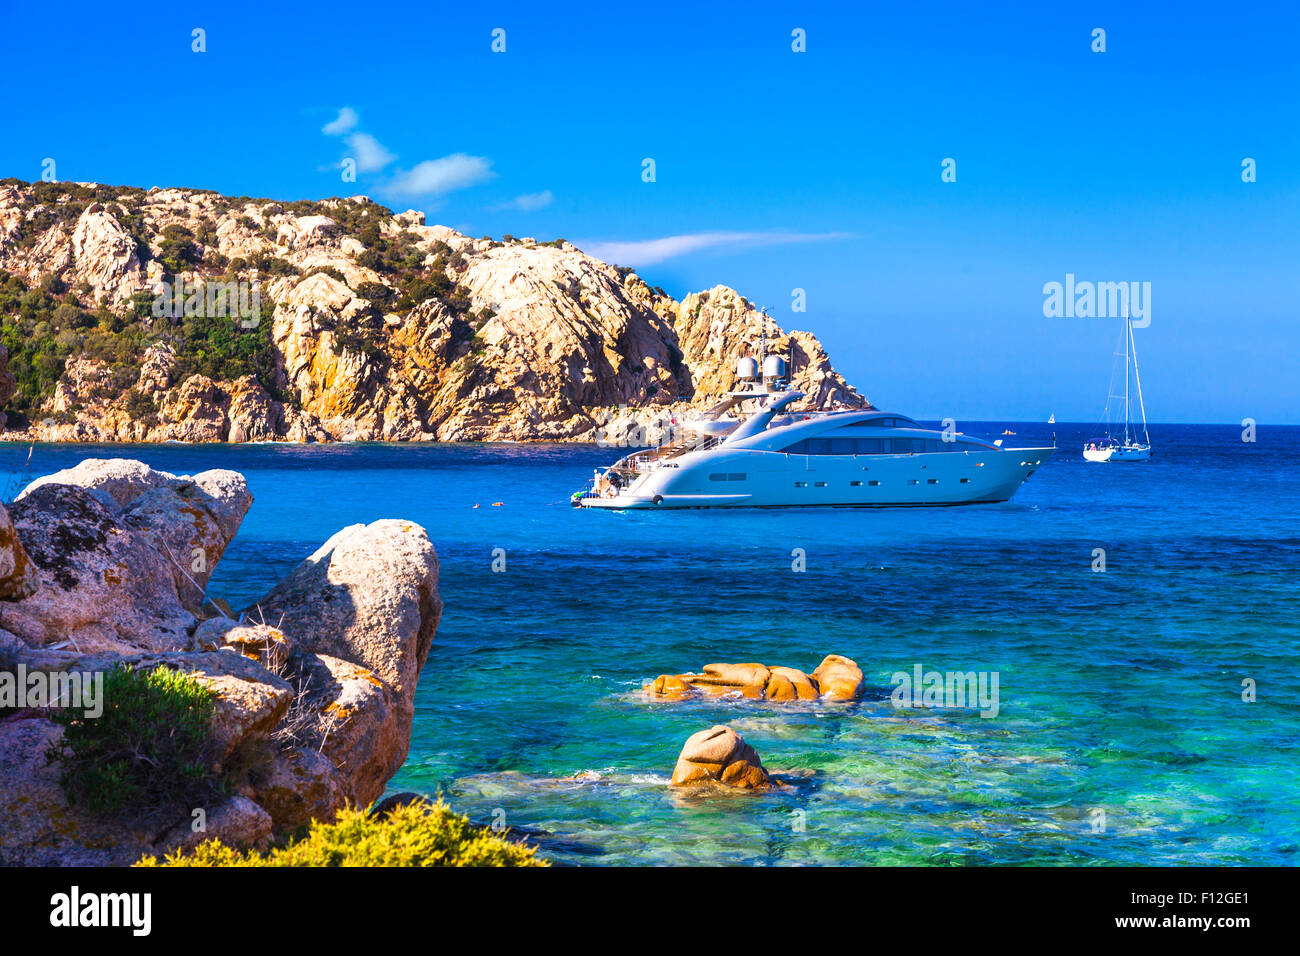 Realxing holidays  - turquoise sea of Sardegna island.  Italy Stock Photo